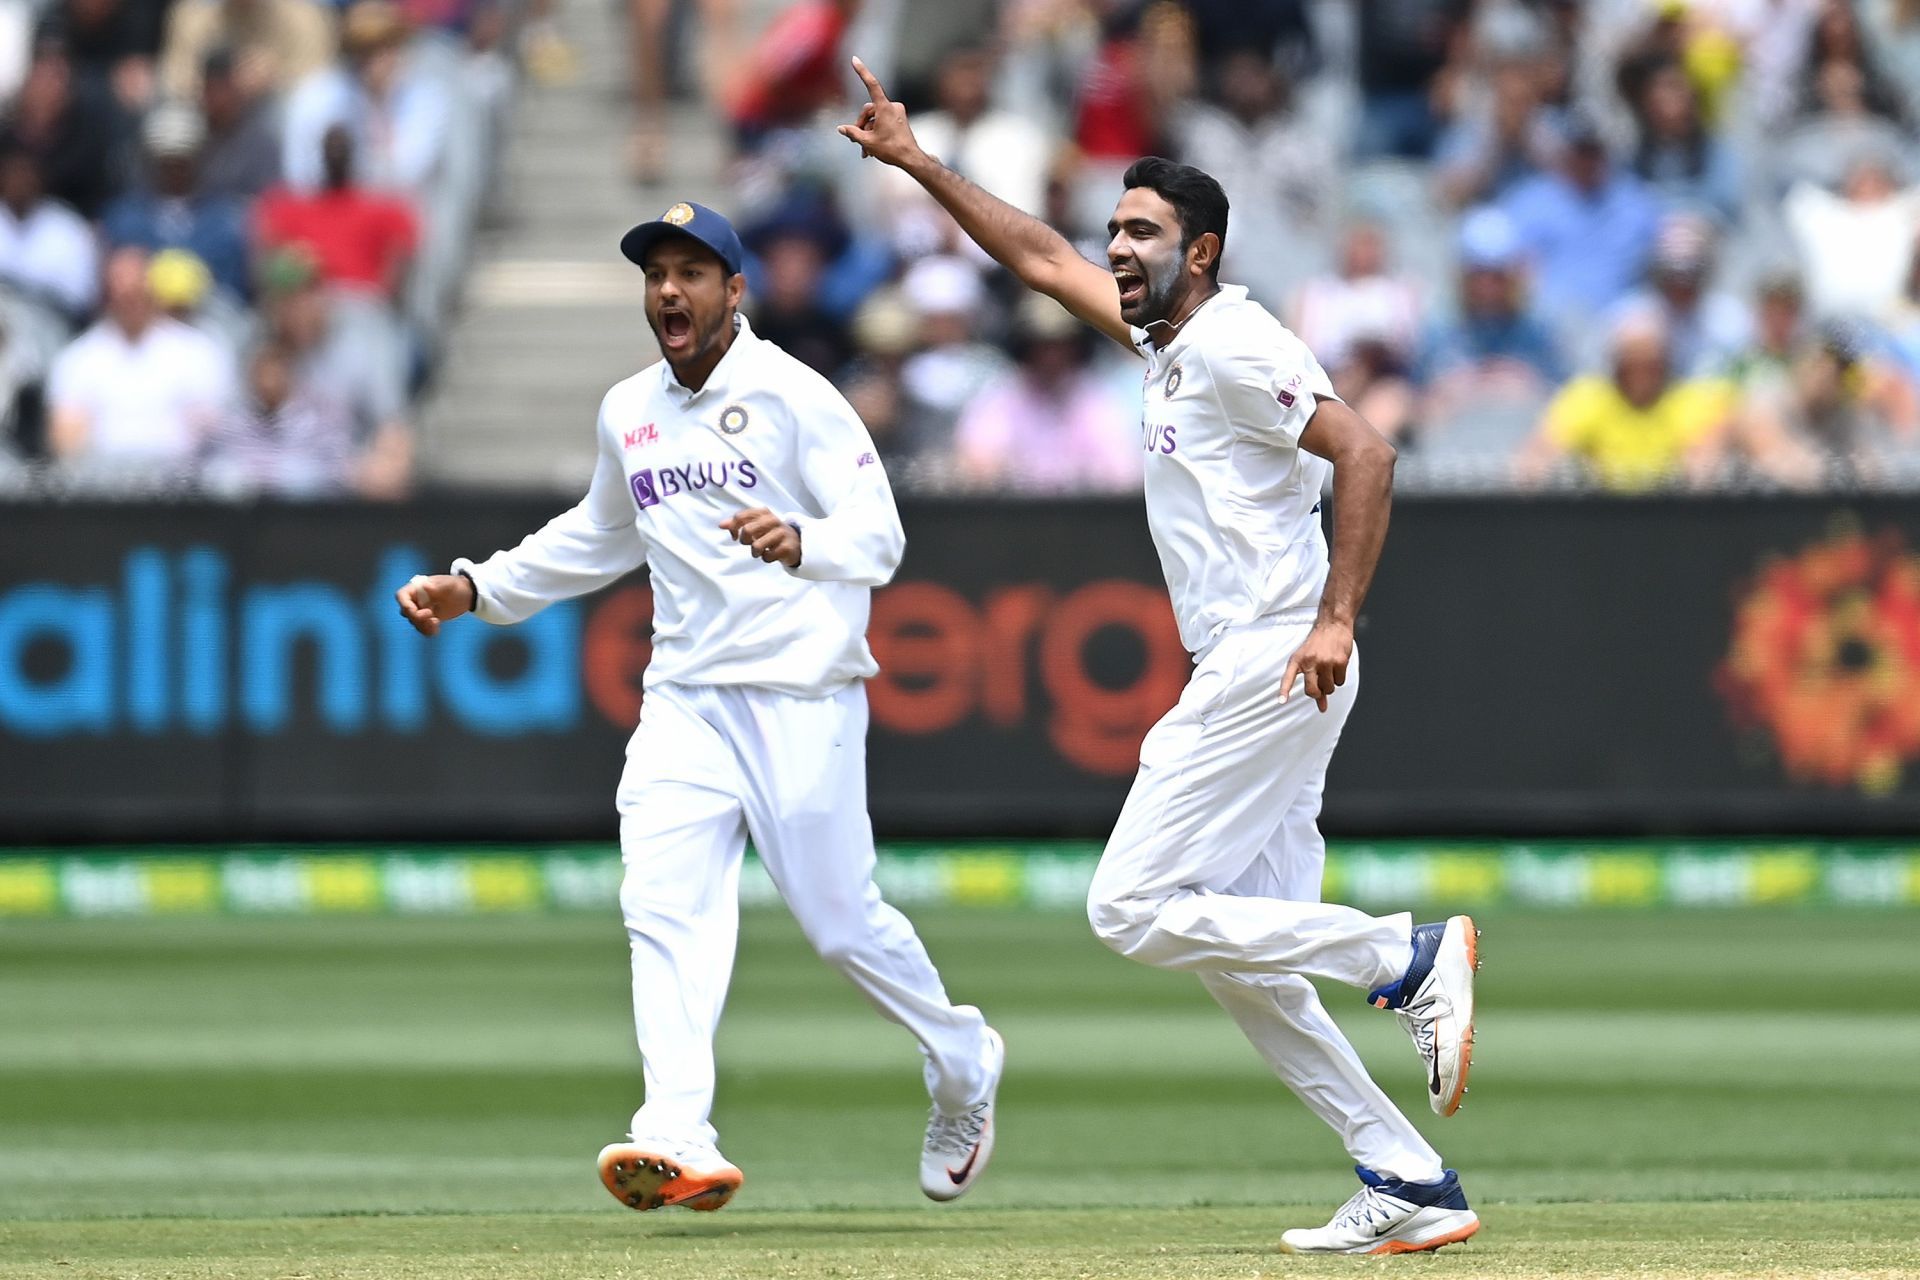 Ravichandran Ashwin bamboozled the Australian batters in the 2020 Boxing Day Test